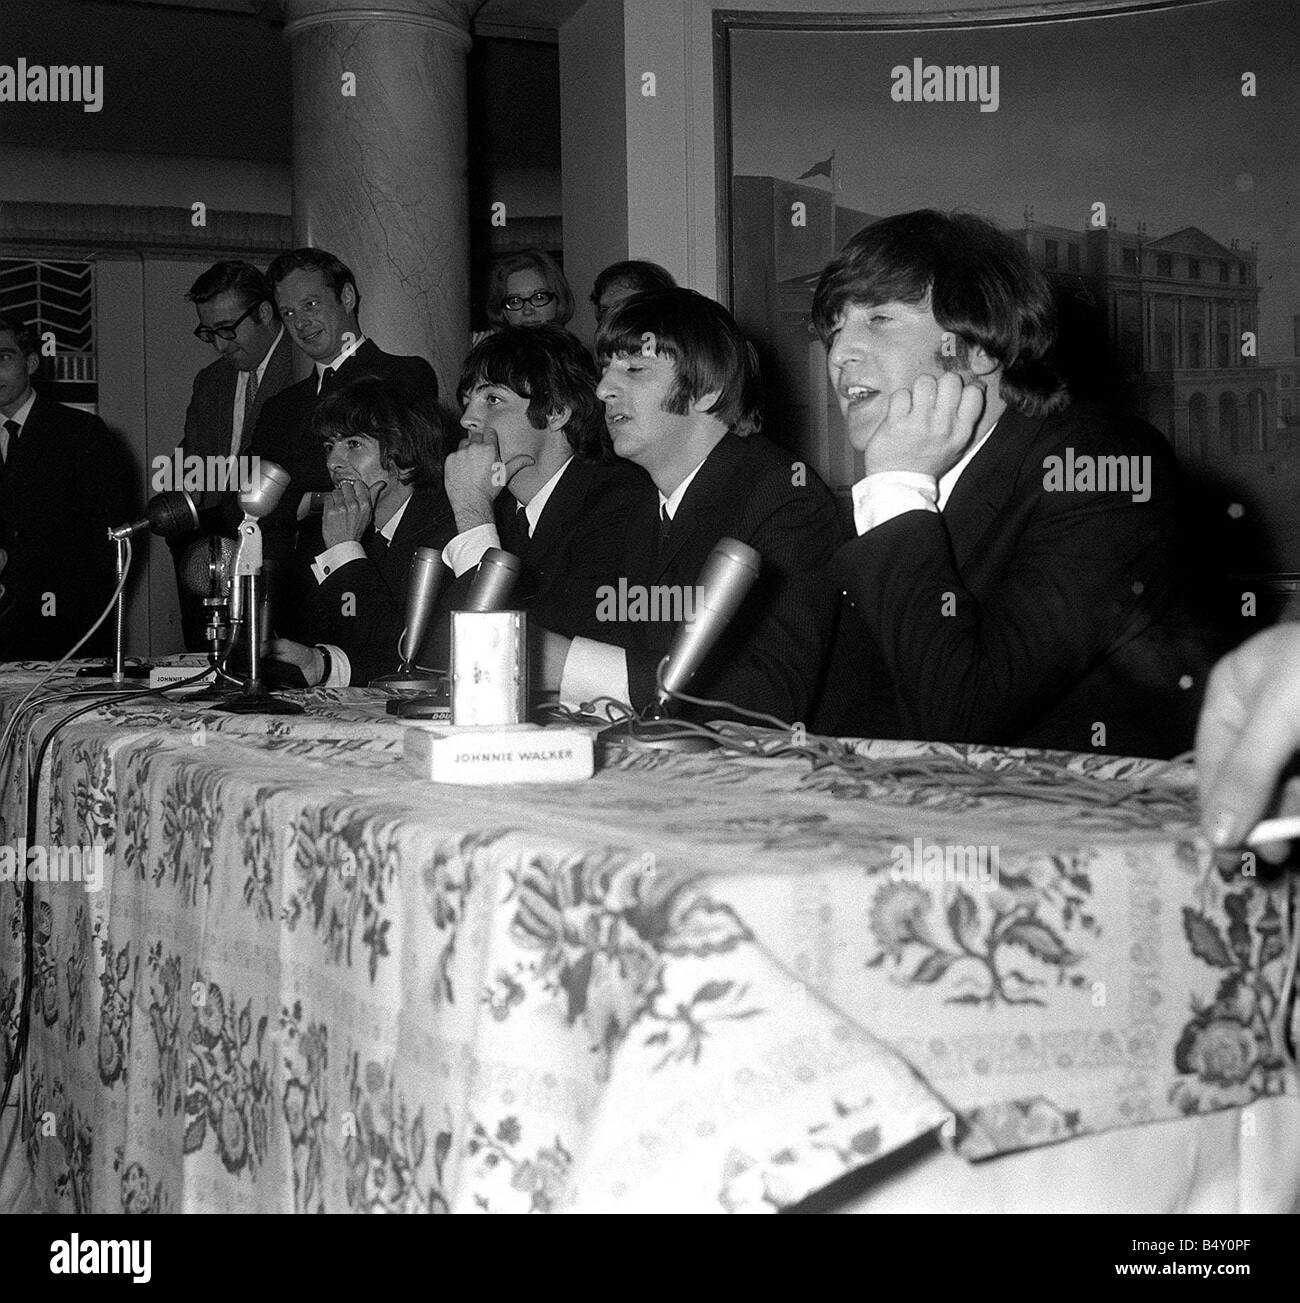 Gruppo pop The Beatles Ottobre 1965 John Lennon Paul McCartney Ringo Starr George Harrison dei Beatles durante una conferenza stampa Foto Stock